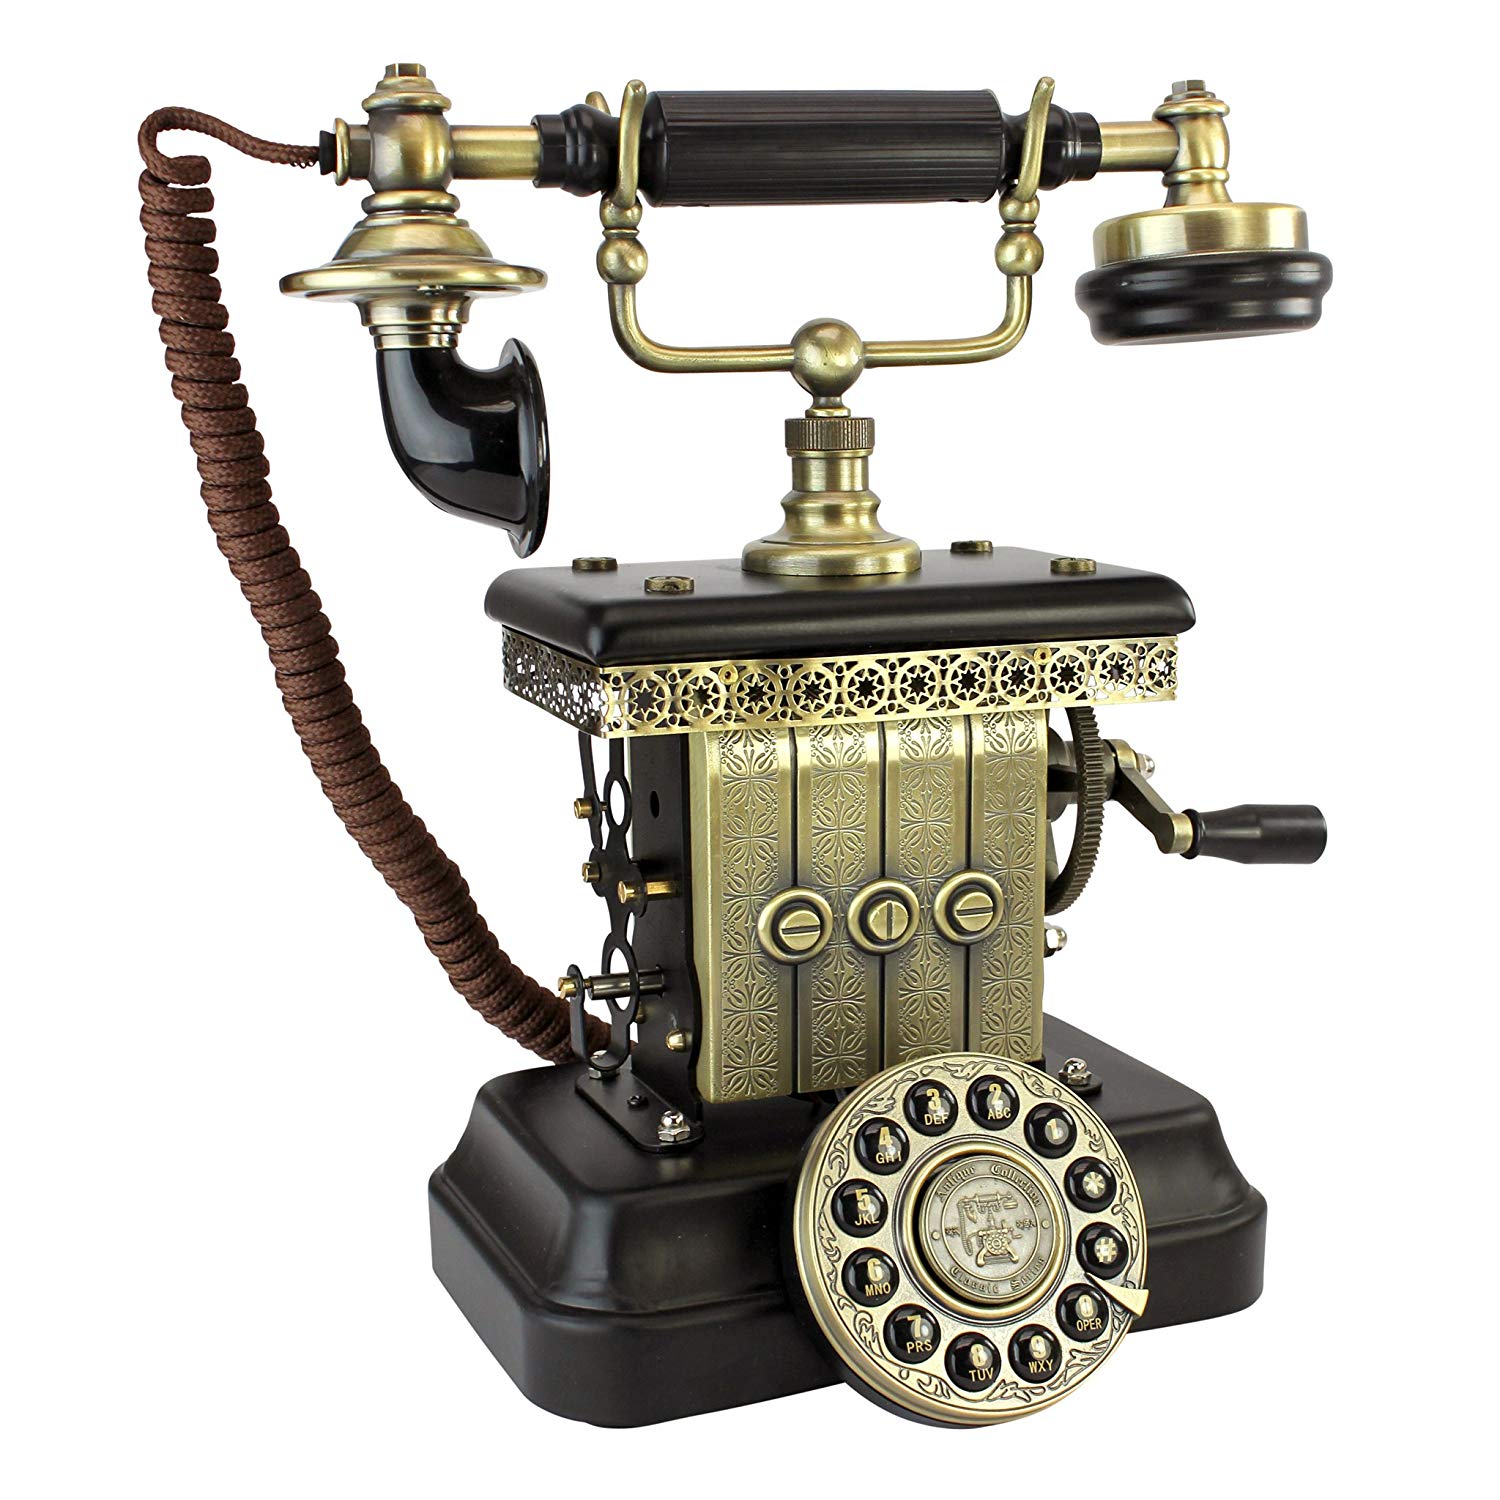 Amazon.com: Antique Phone - Victorian Magneto 1923 Rotary Telephone ...